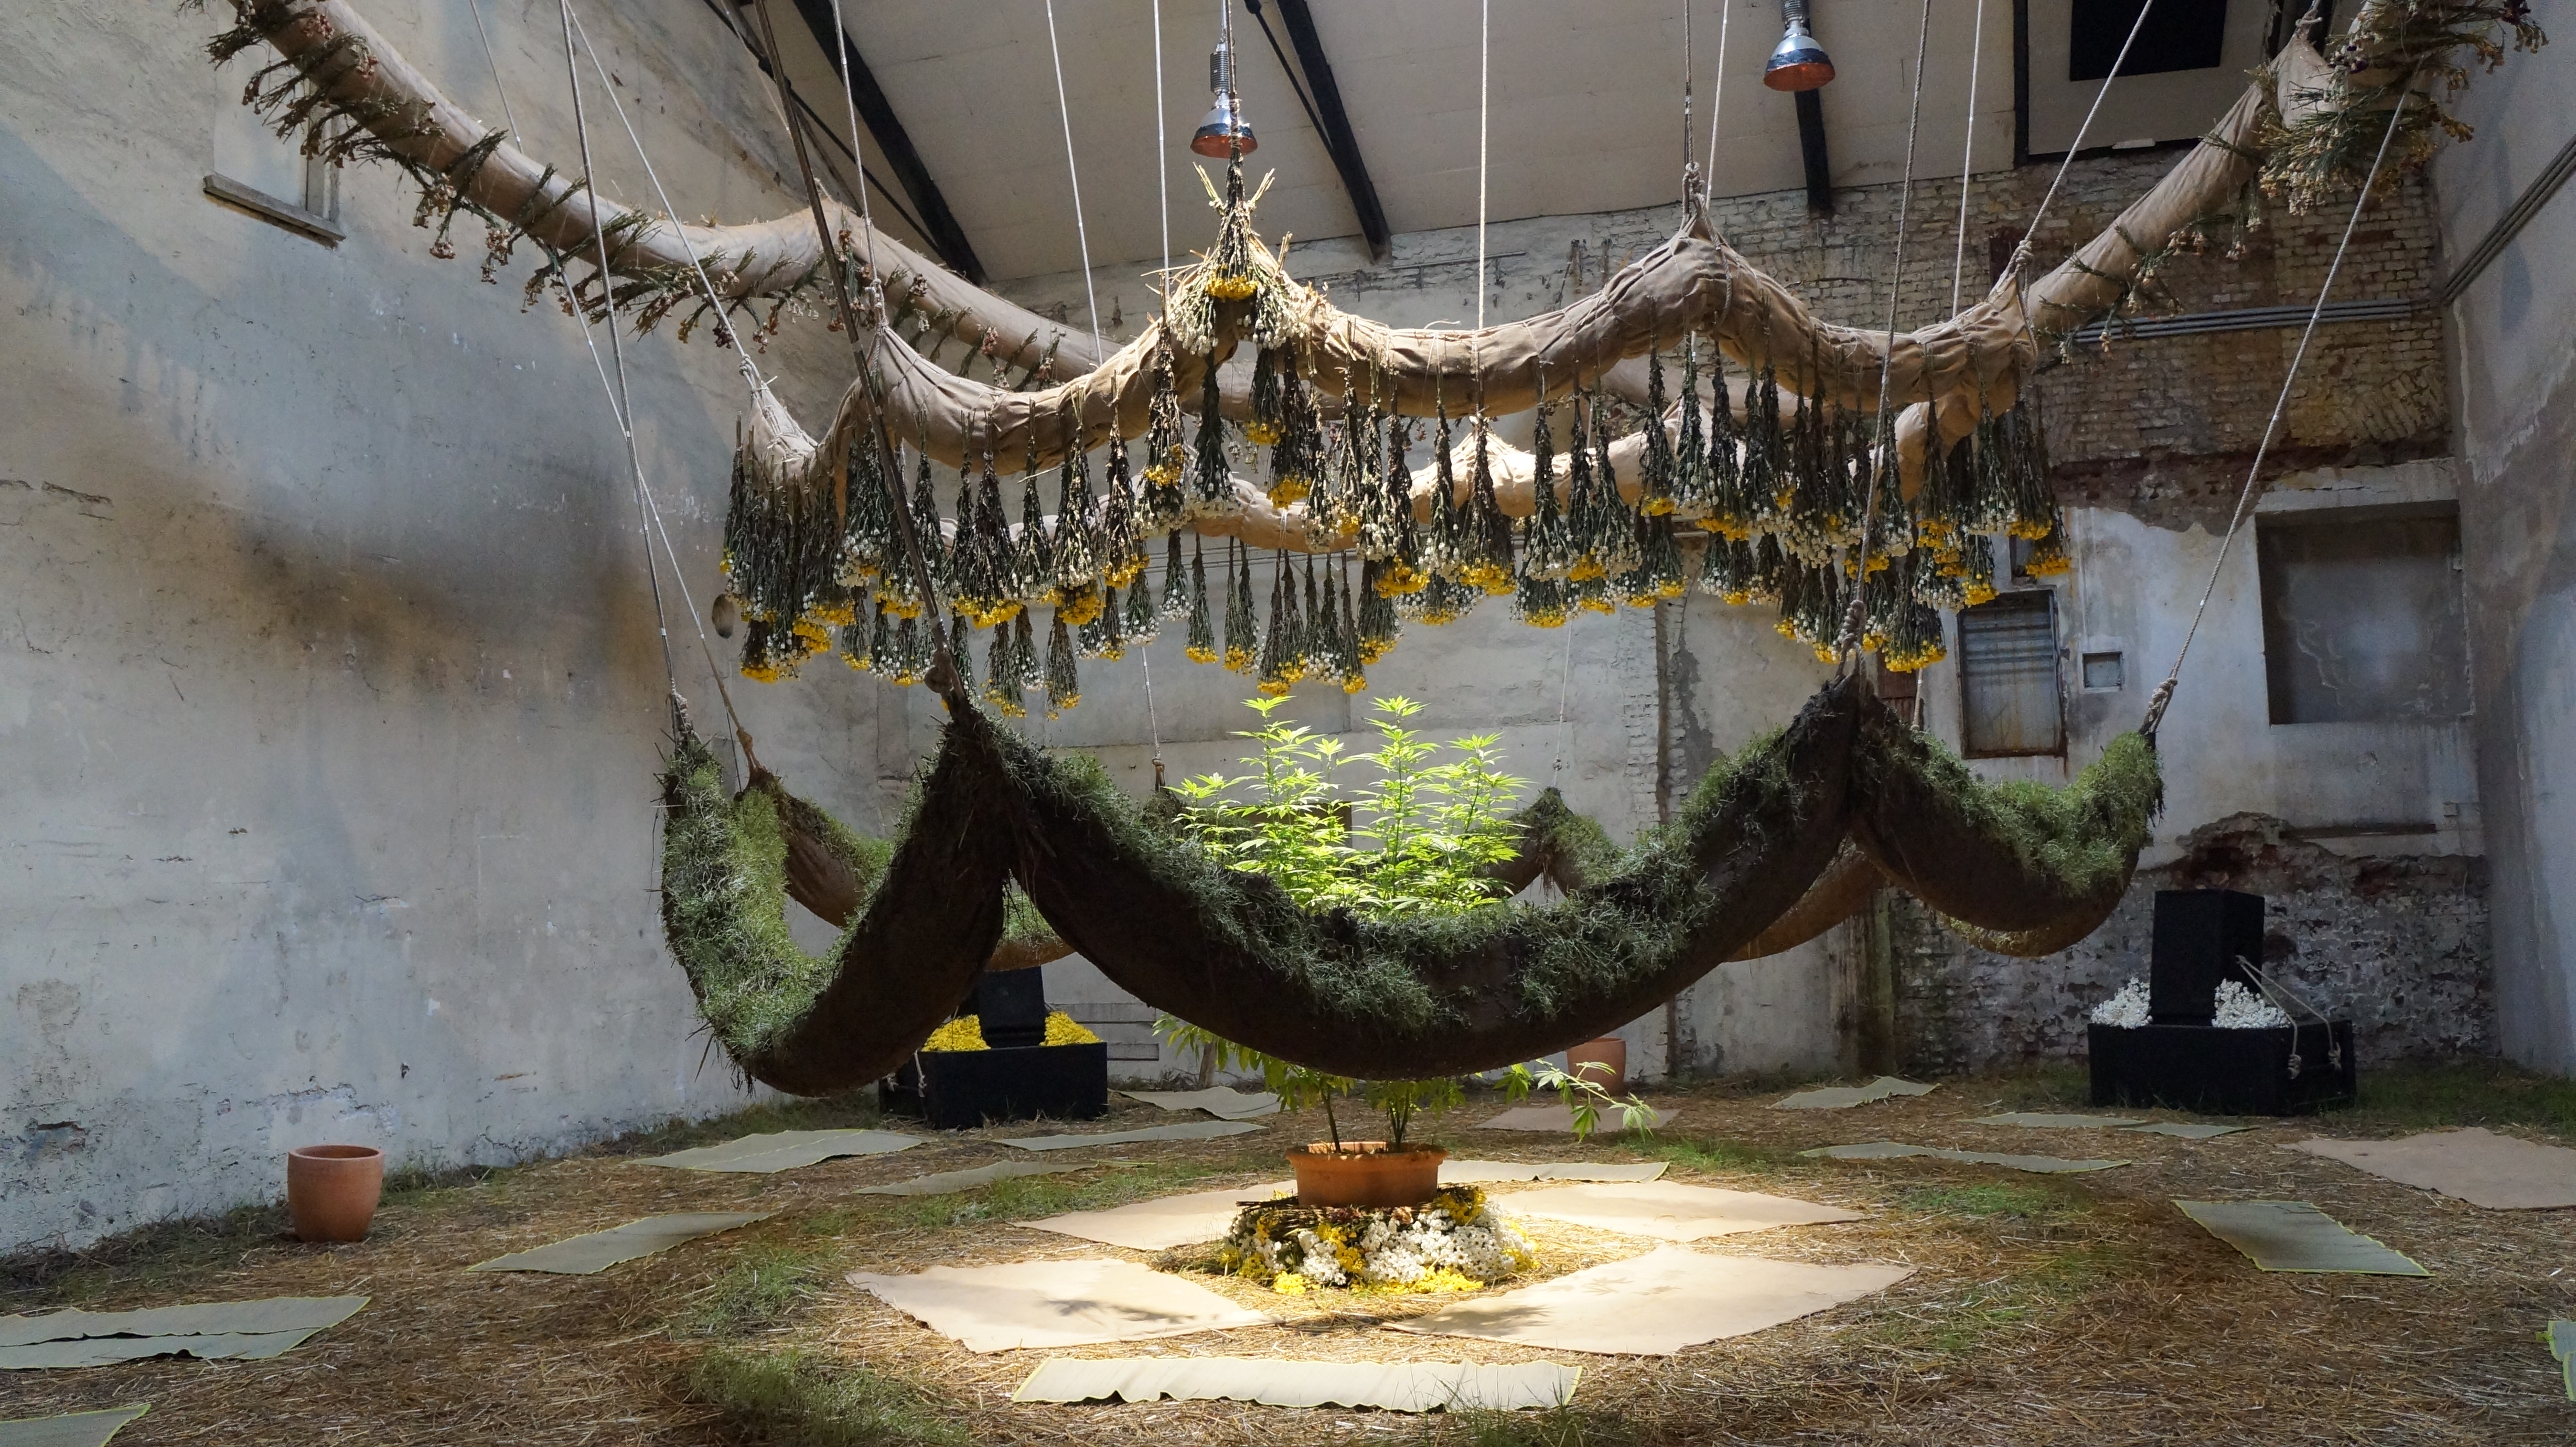 a large suspended garden Daniel Lie, Death Center for the Living